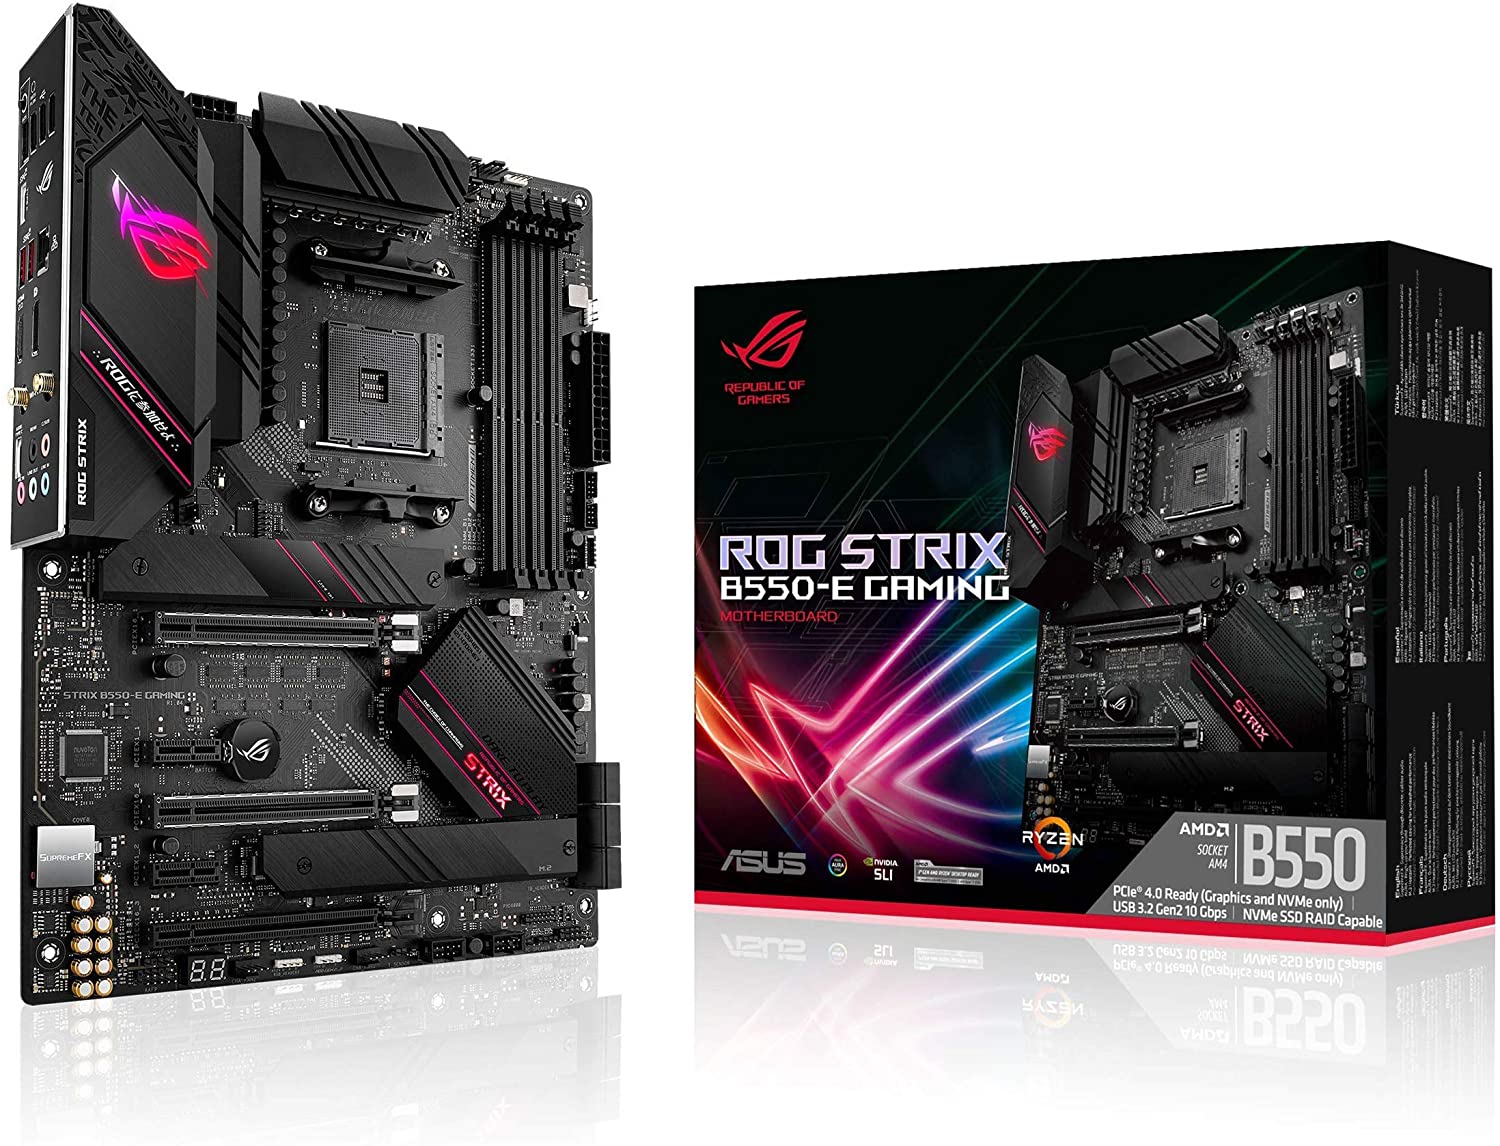 ASUS ROG Strix B550-E Gaming AMD AM4 3rd Gen Ryzen ATX Gaming Motherboard-PCIe 4.0, NVIDIA SLI, WiFi 6, 2.5Gb LAN, 14+2 Power Stages, USB 3.2 Type-C